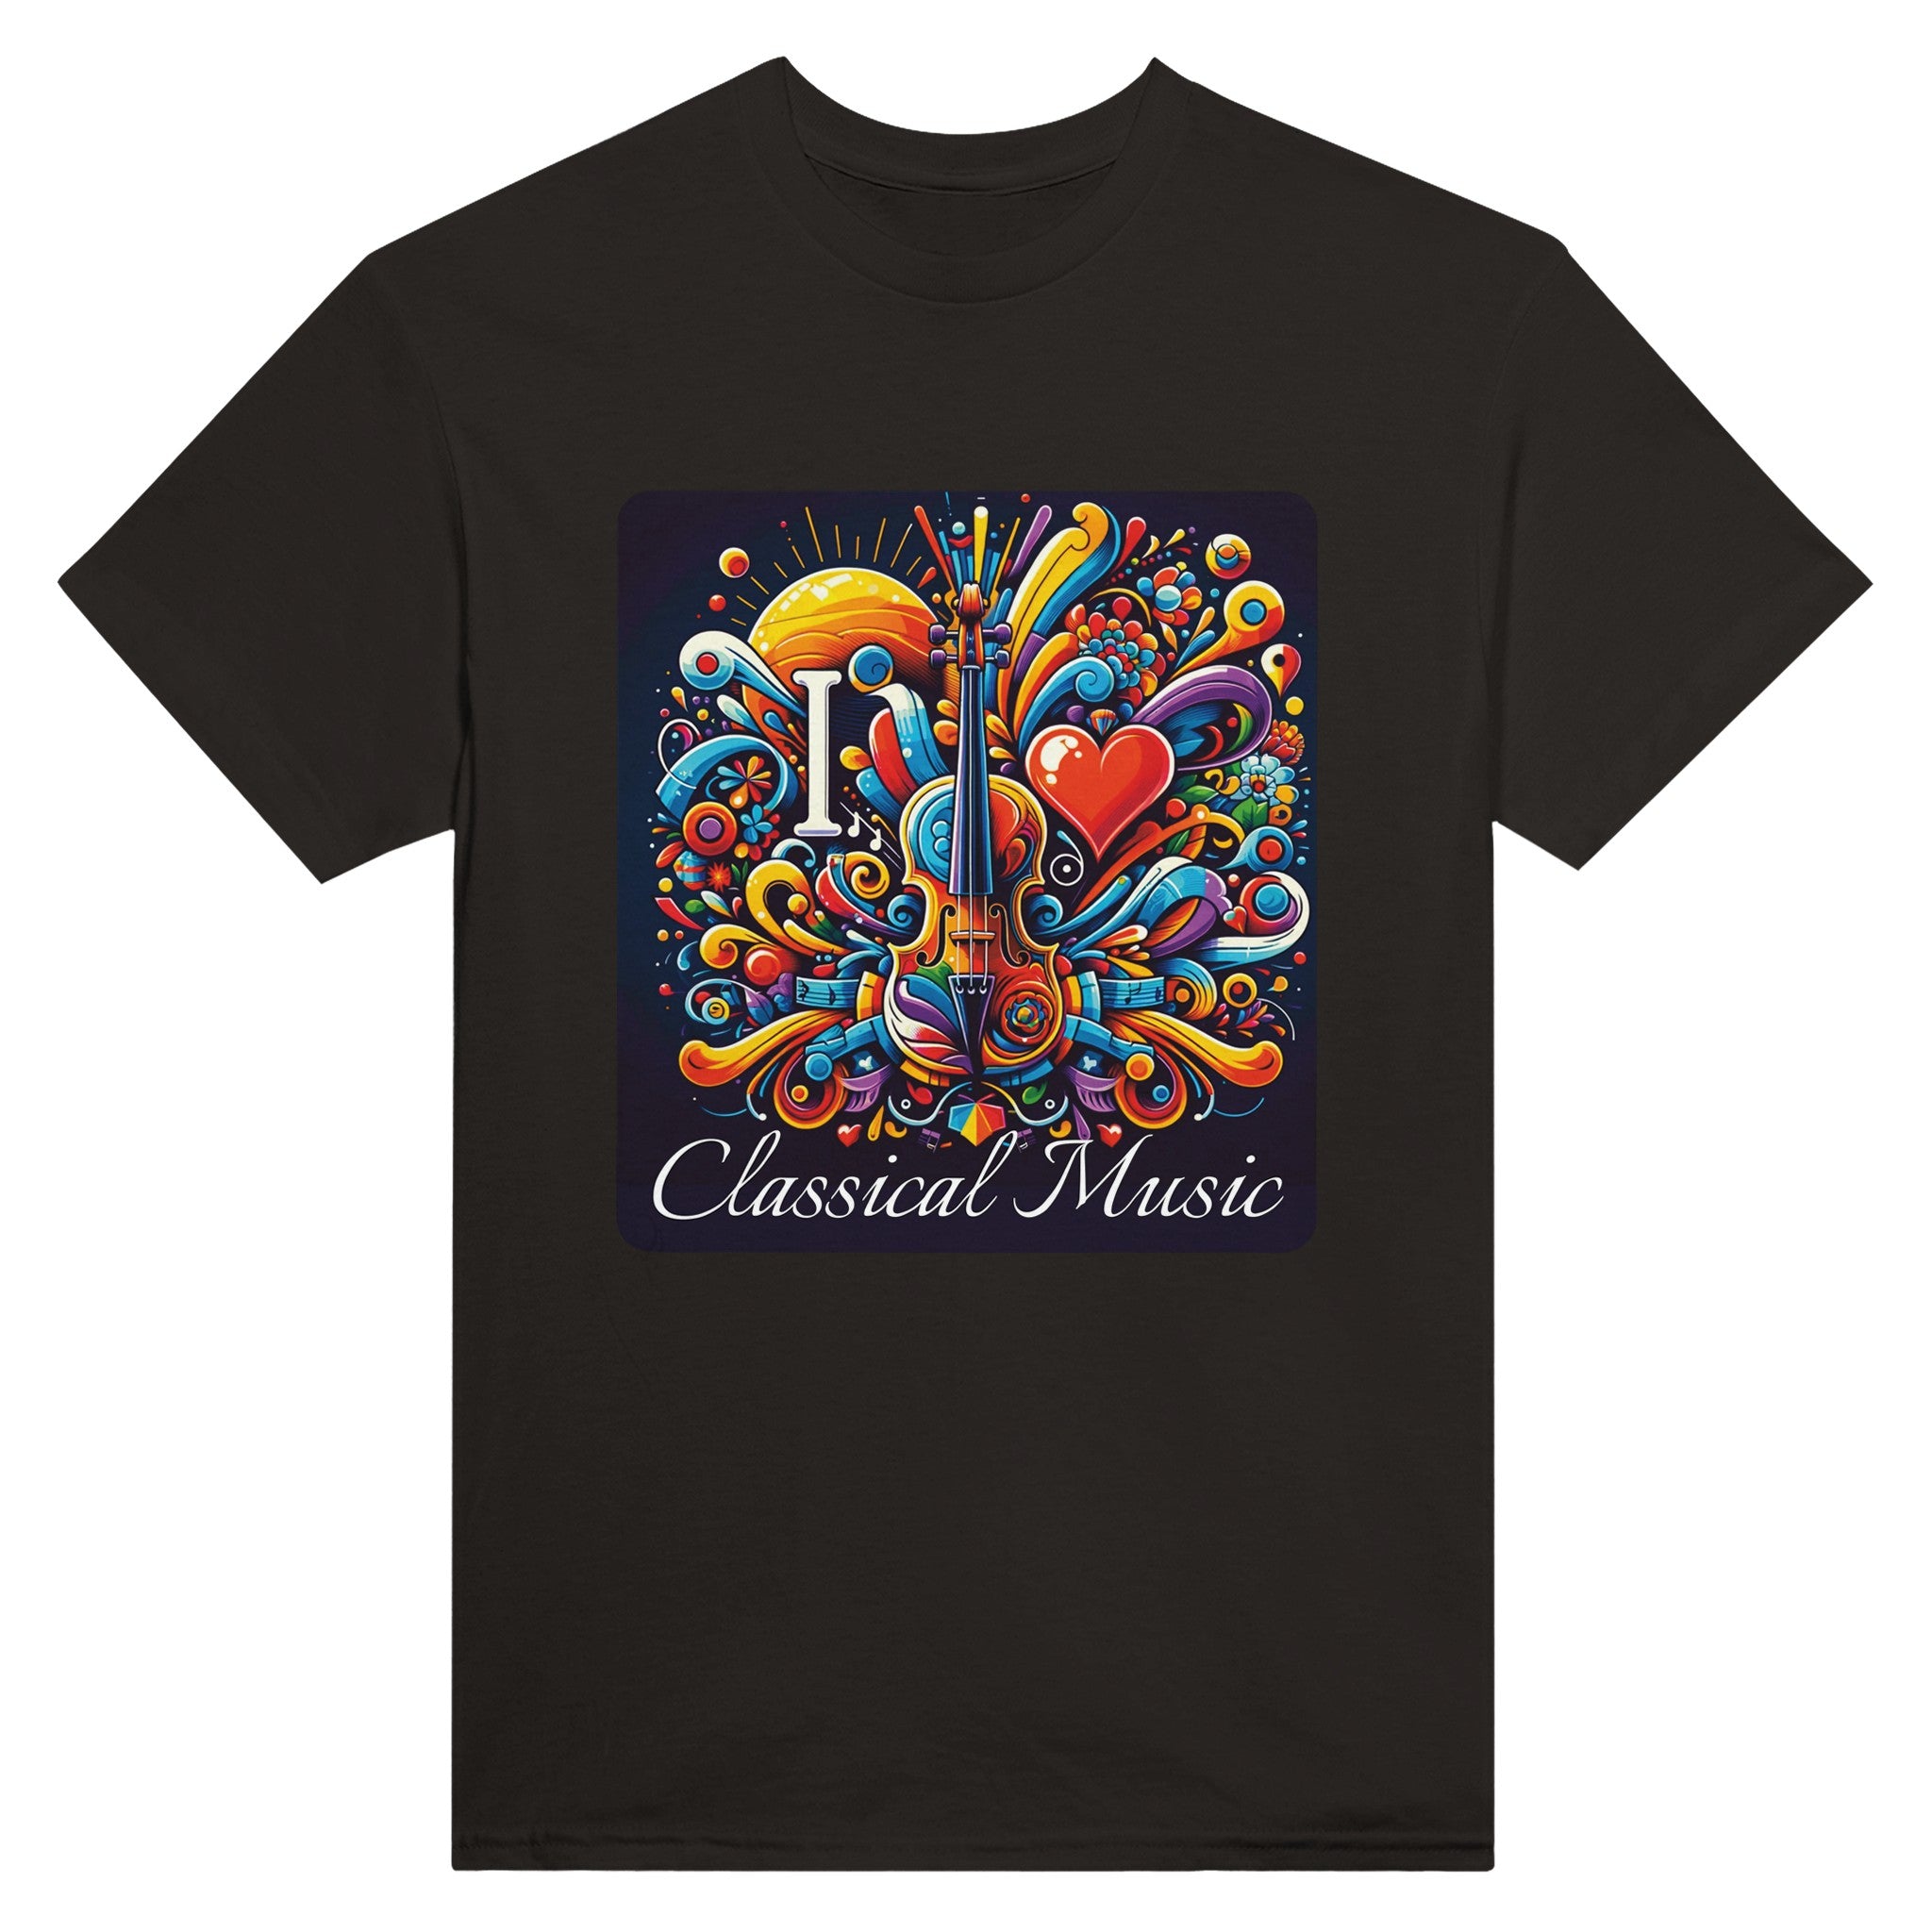 "I love Classical Music" Tungvægts unisex t-shirt med rund hals